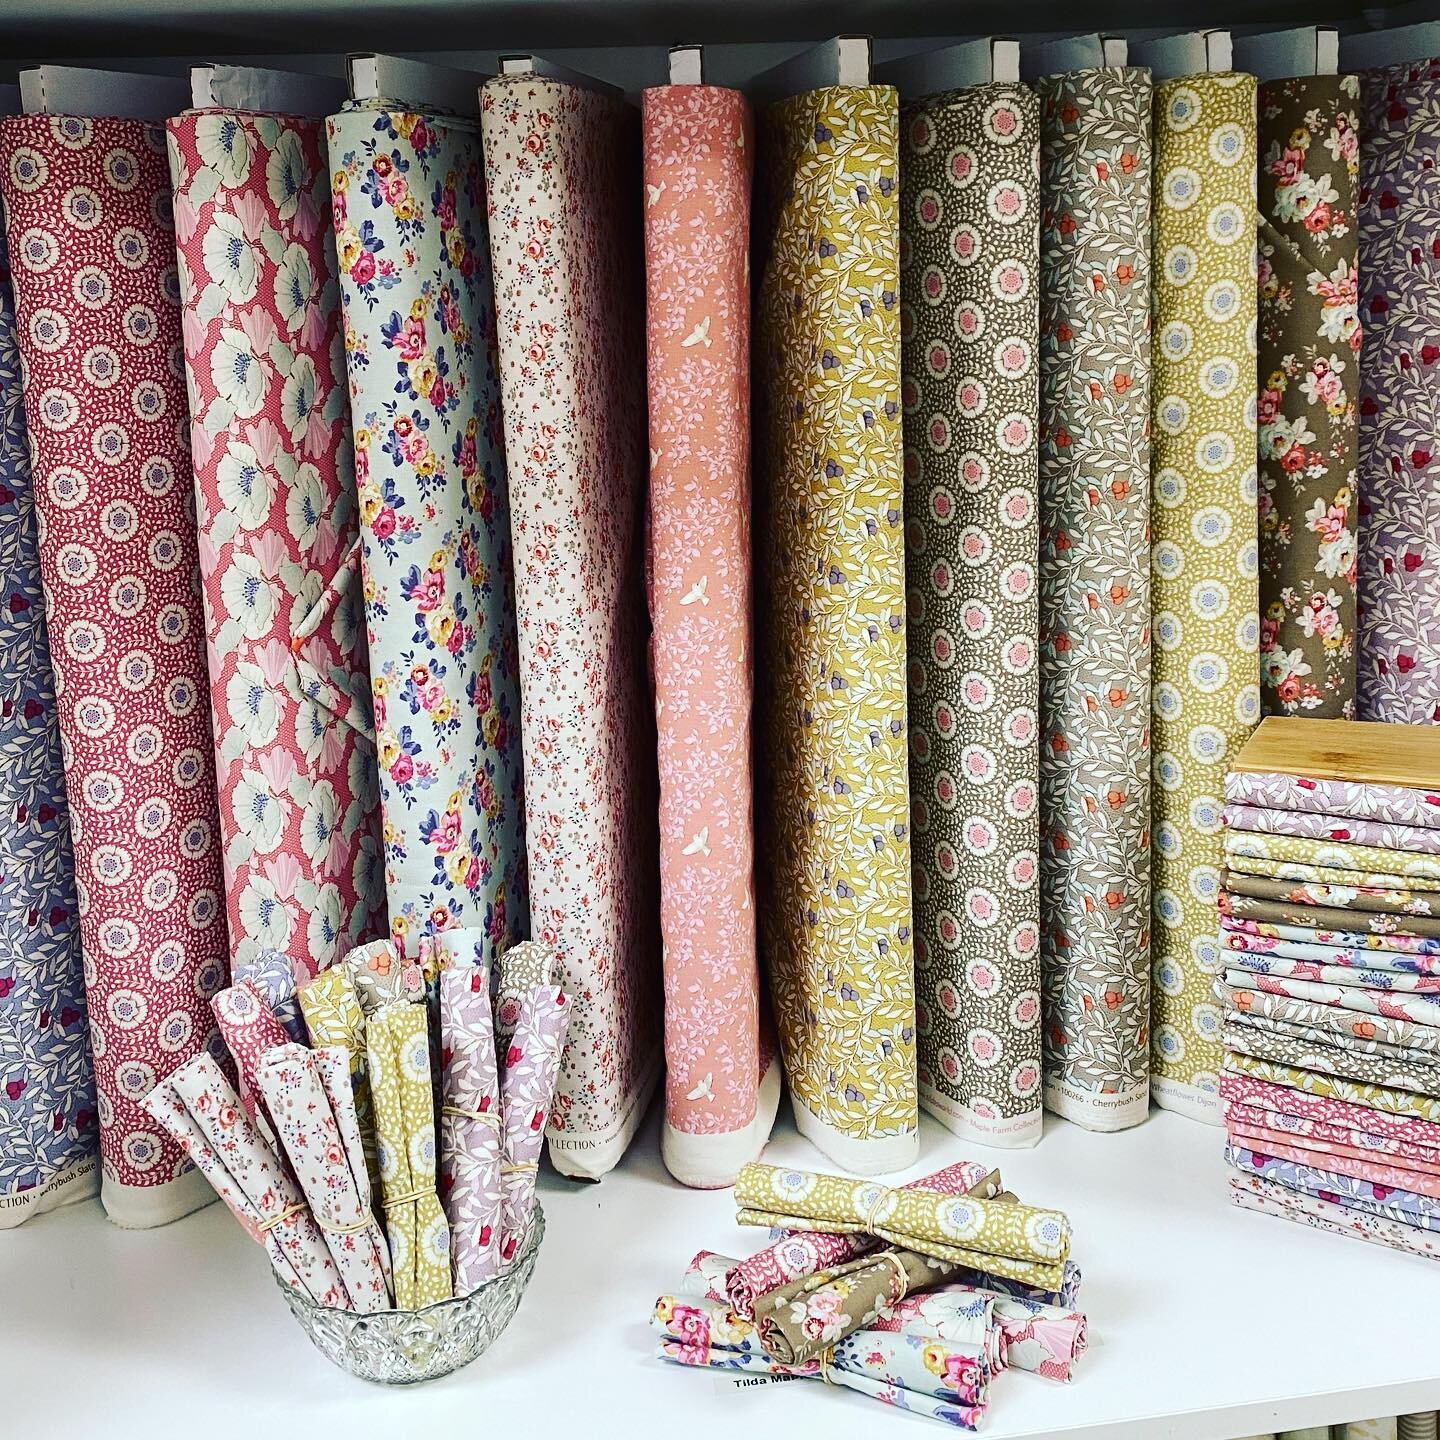 So these beautiful temptations snuck into the shop this week 😊😍💕 #tildamaplefarmfabric #cottonrosesw #cottonrose